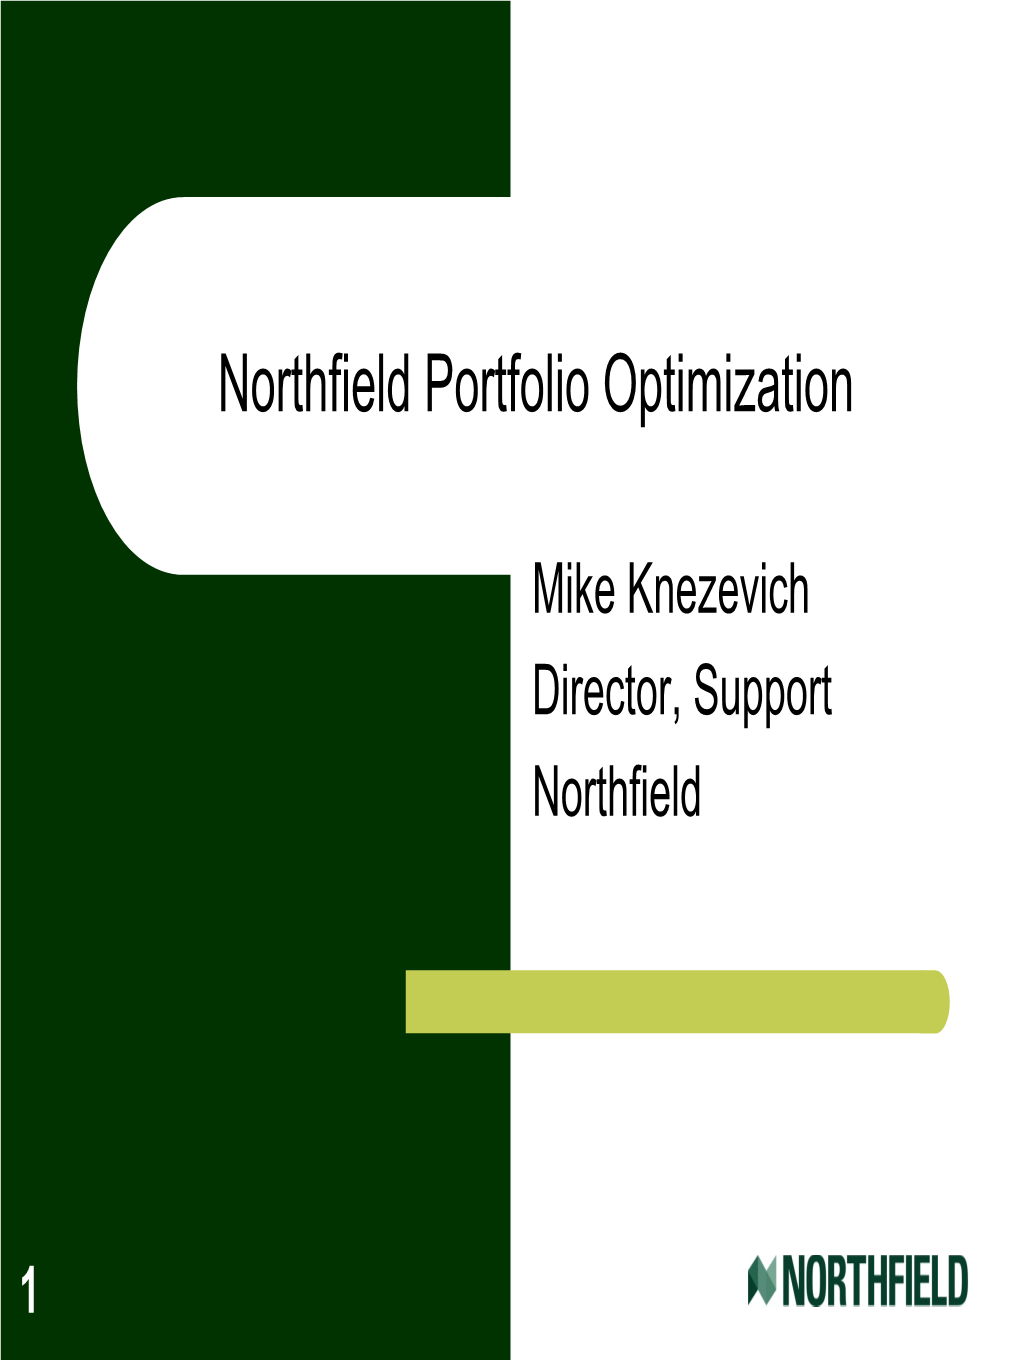 Optimization for Northfield Users